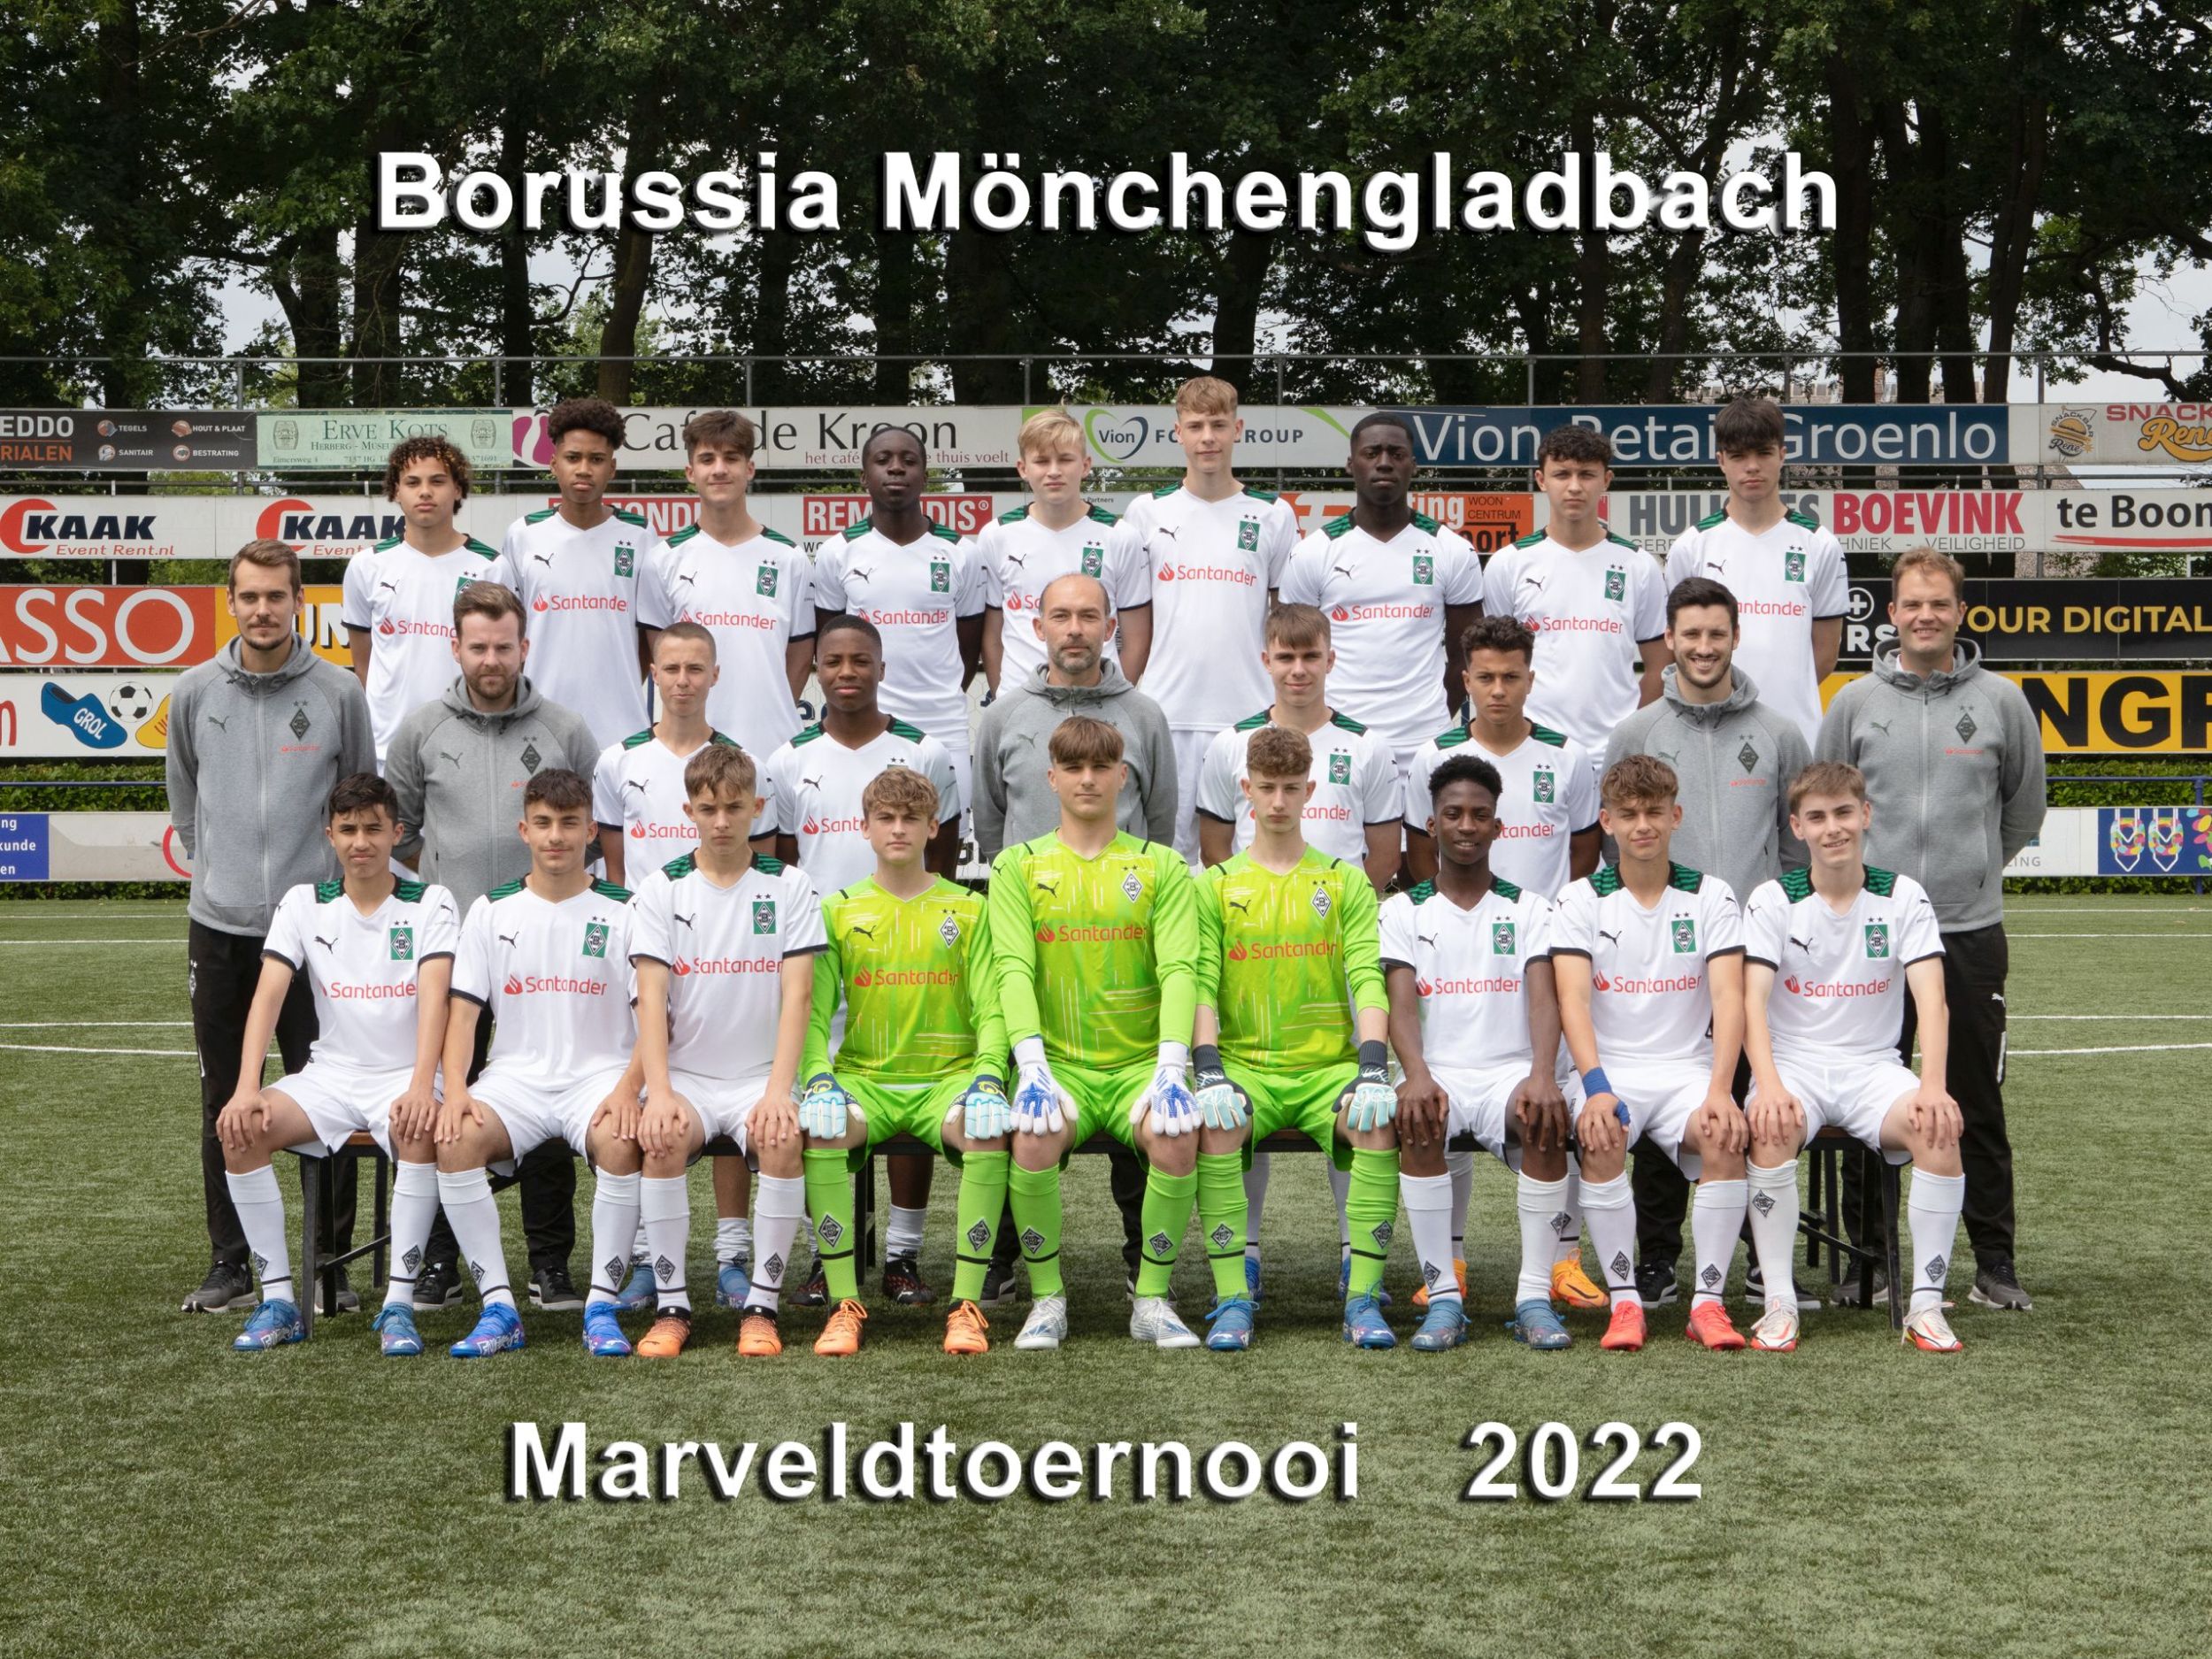 Marveld Tournament 2022 - Team Borussia Mönchengladbach